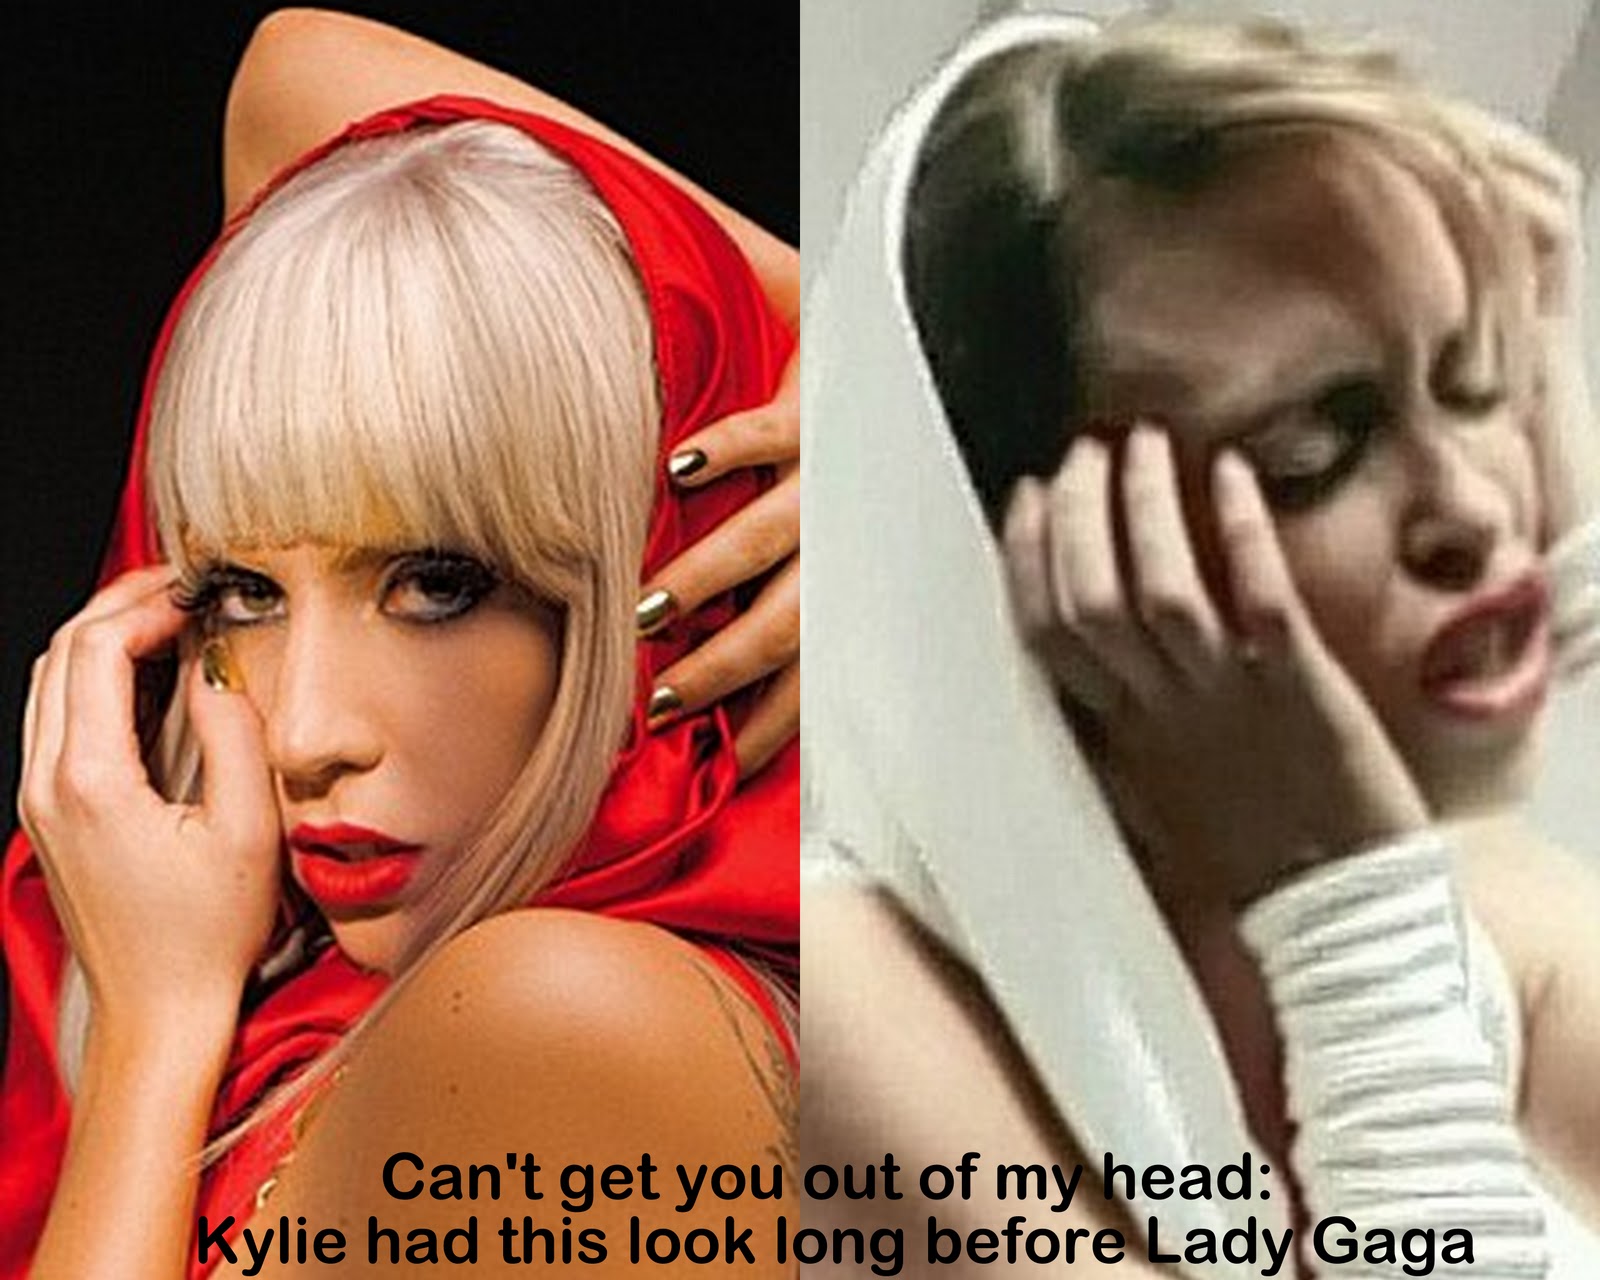 http://2.bp.blogspot.com/_CEEU2PTkVq0/TSyKTFbcK9I/AAAAAAAACPM/UB5WeK80wO8/s1600/Lady-Gaga-Kylie-Minogue.jpg